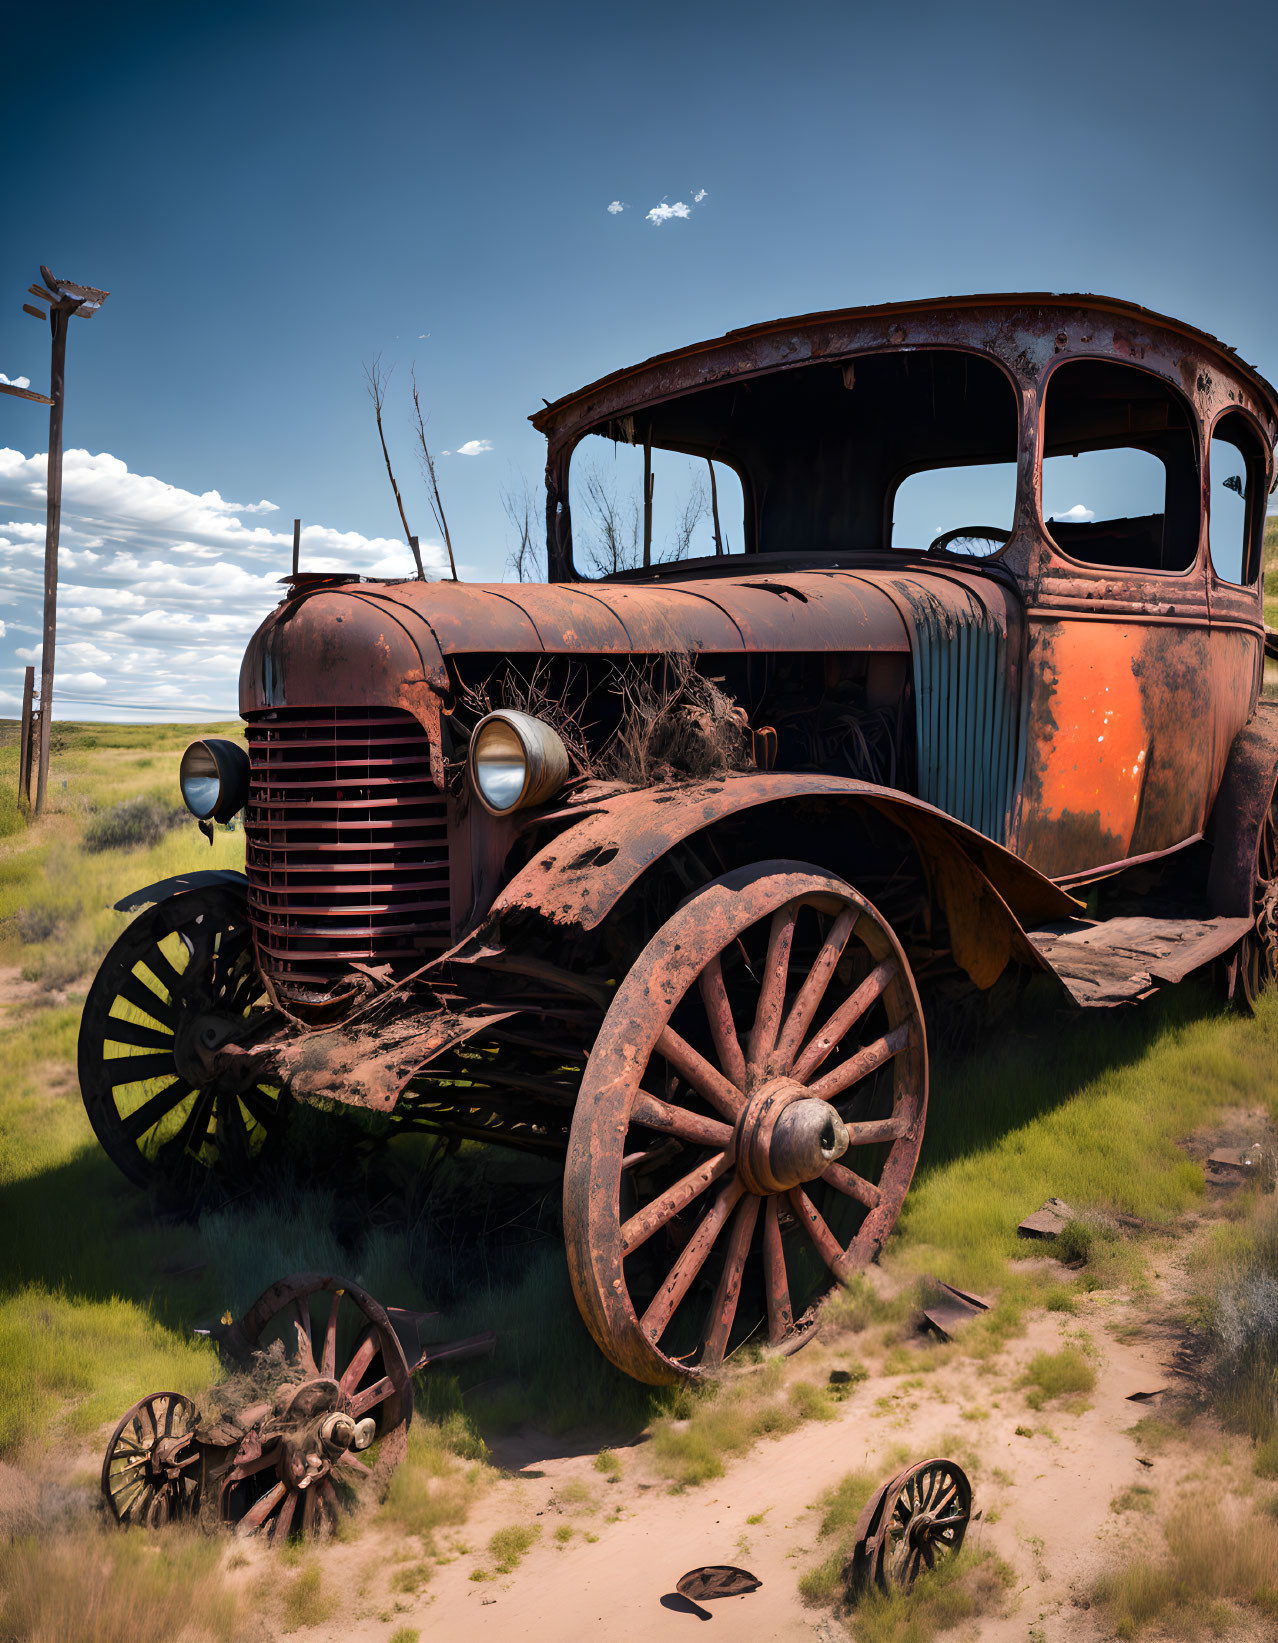 Abandoned rusty car with broken wheels in grassy field under blue sky